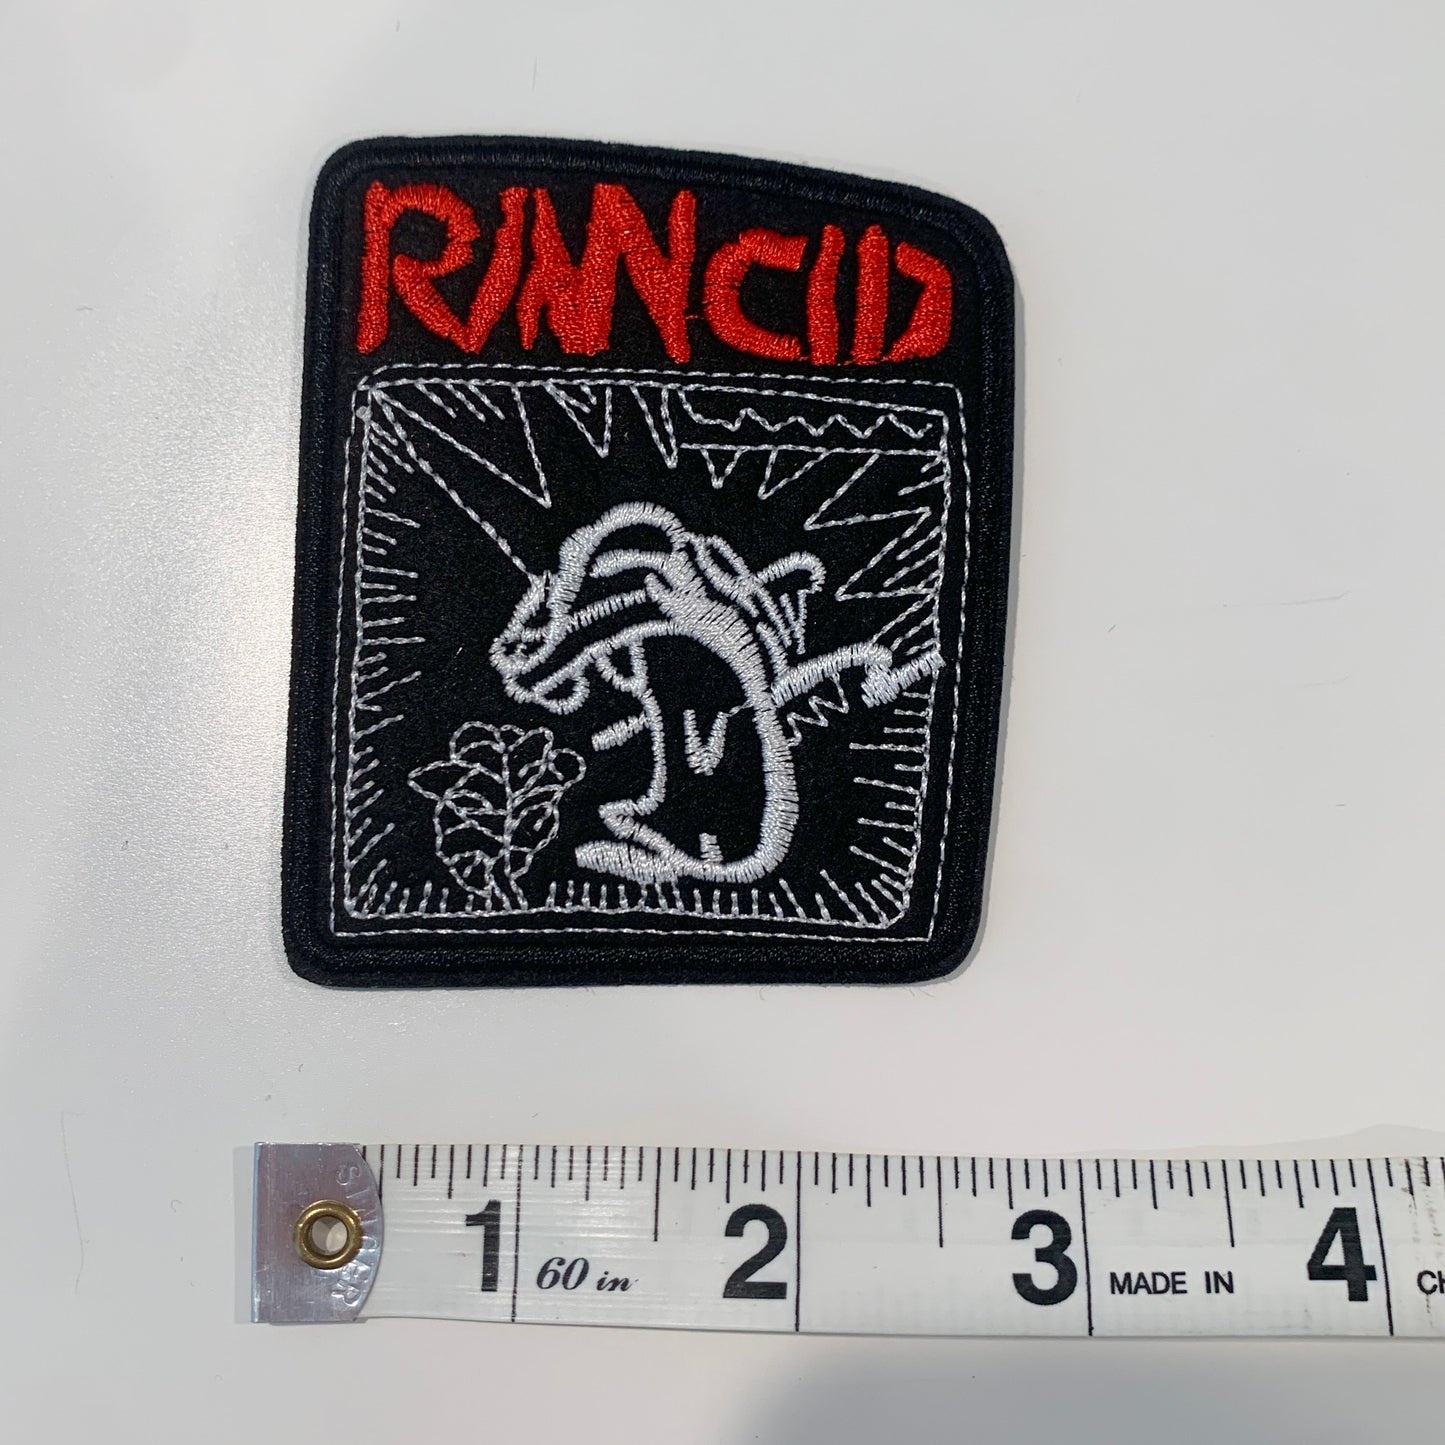 RANCID Patch (2 design options)